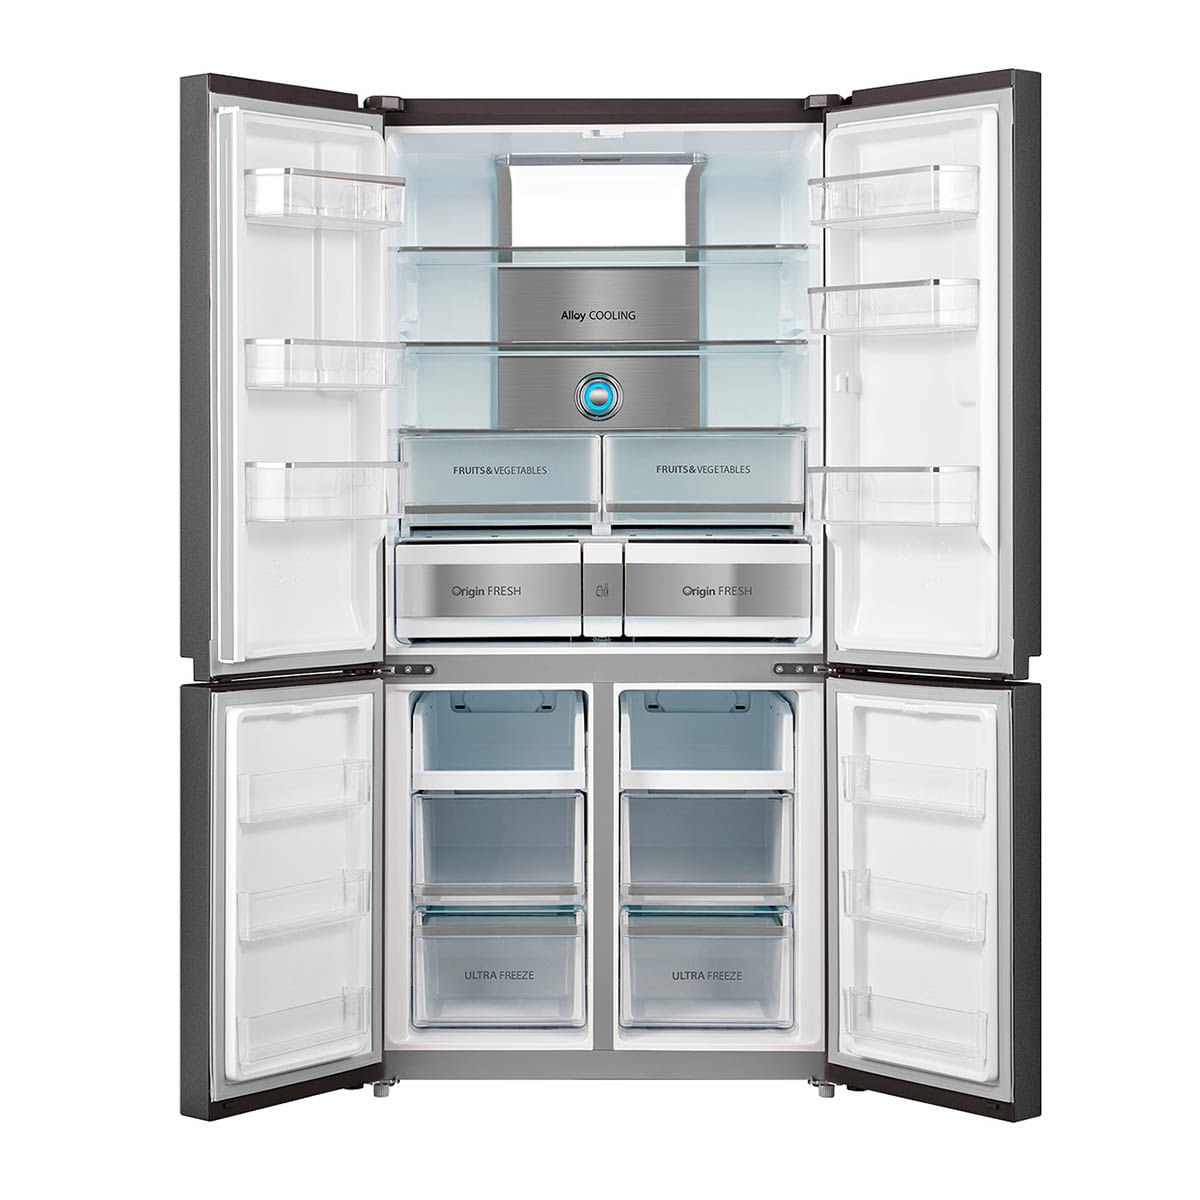 geladeira-toshiba-degelo-automatico-4-portas-french-door-convertzone-638l-cinza-morandi-110v-3.jpg